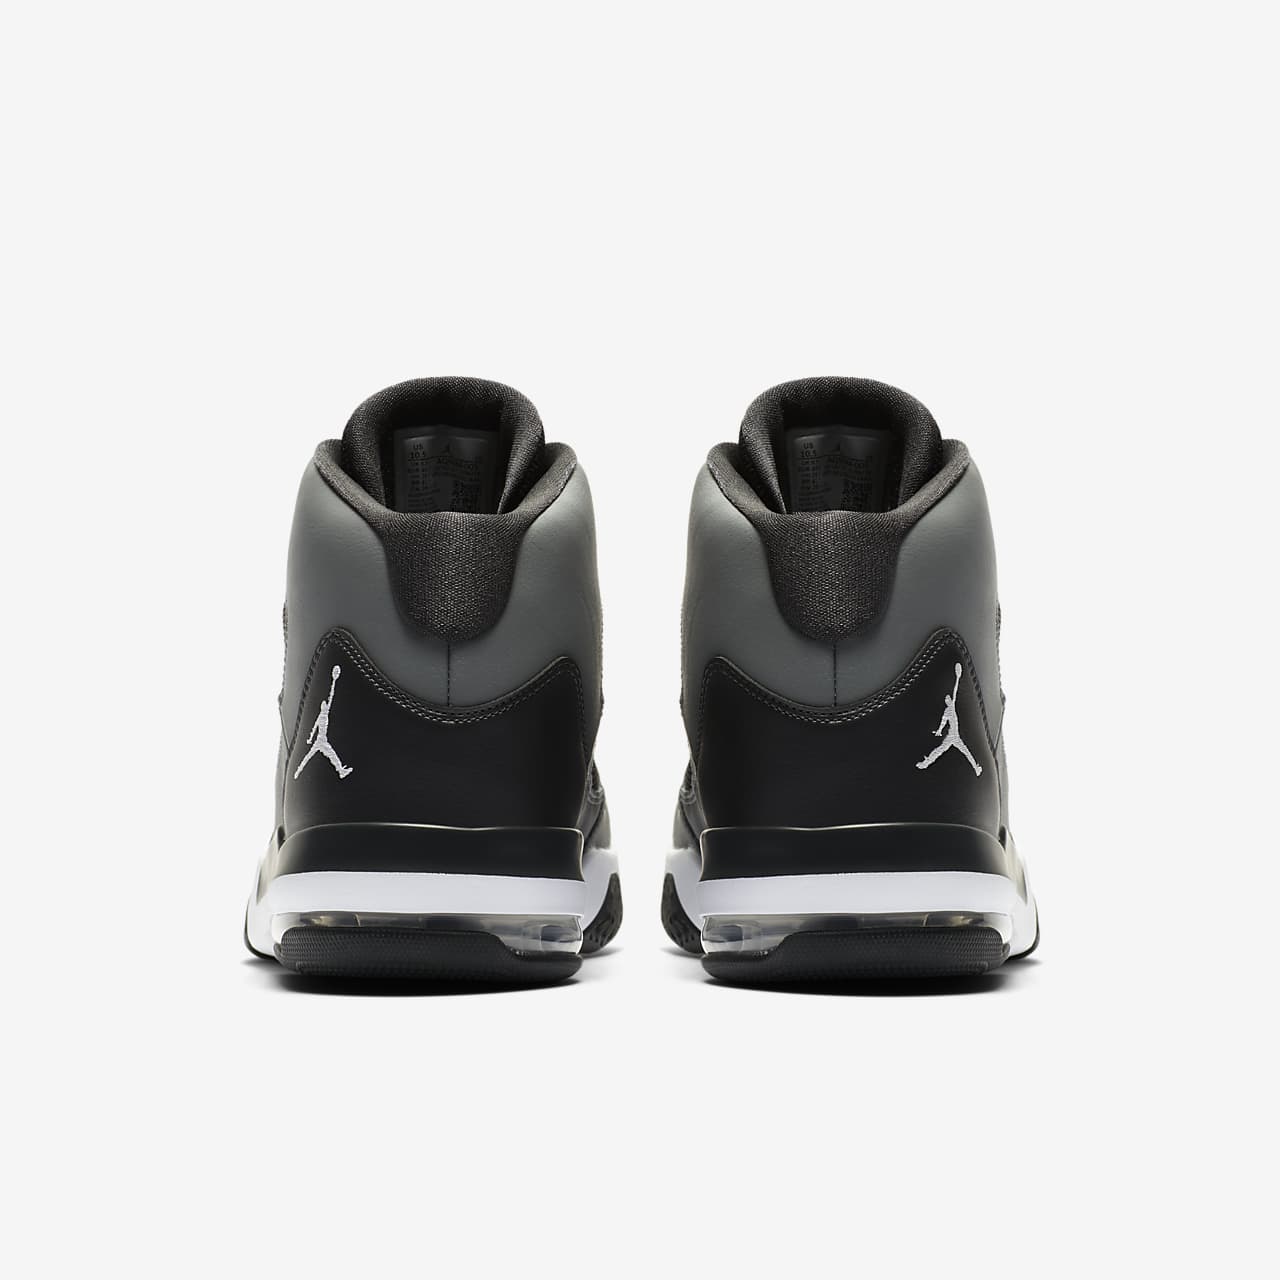 jordan max aura grey men's shoe